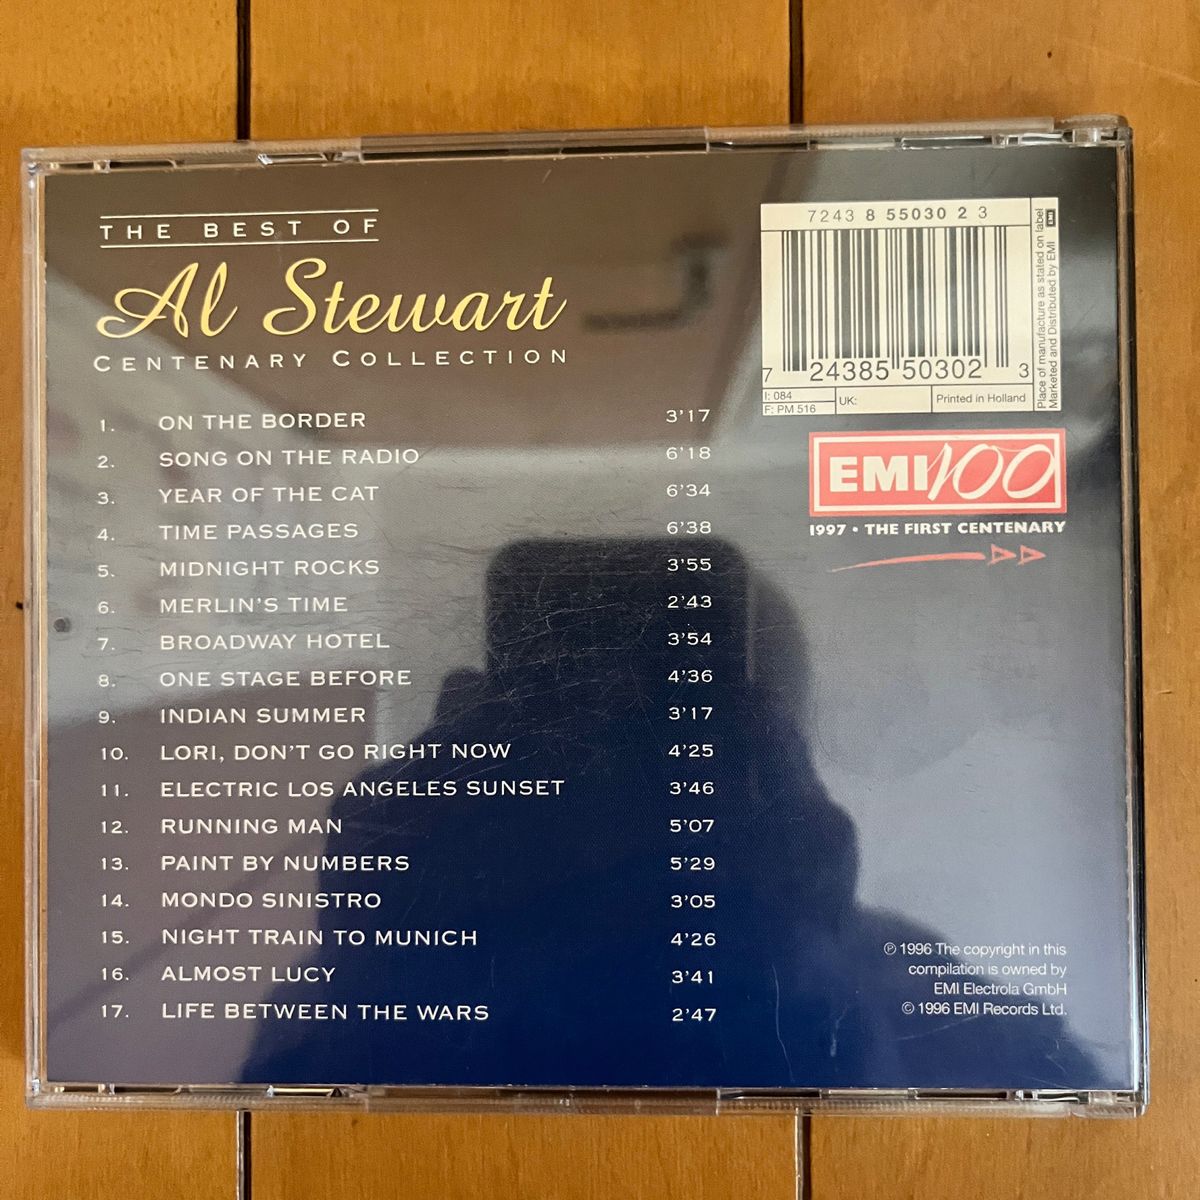 【CD】アル・スチュワート『The Best Of Al Stewart』輸入盤